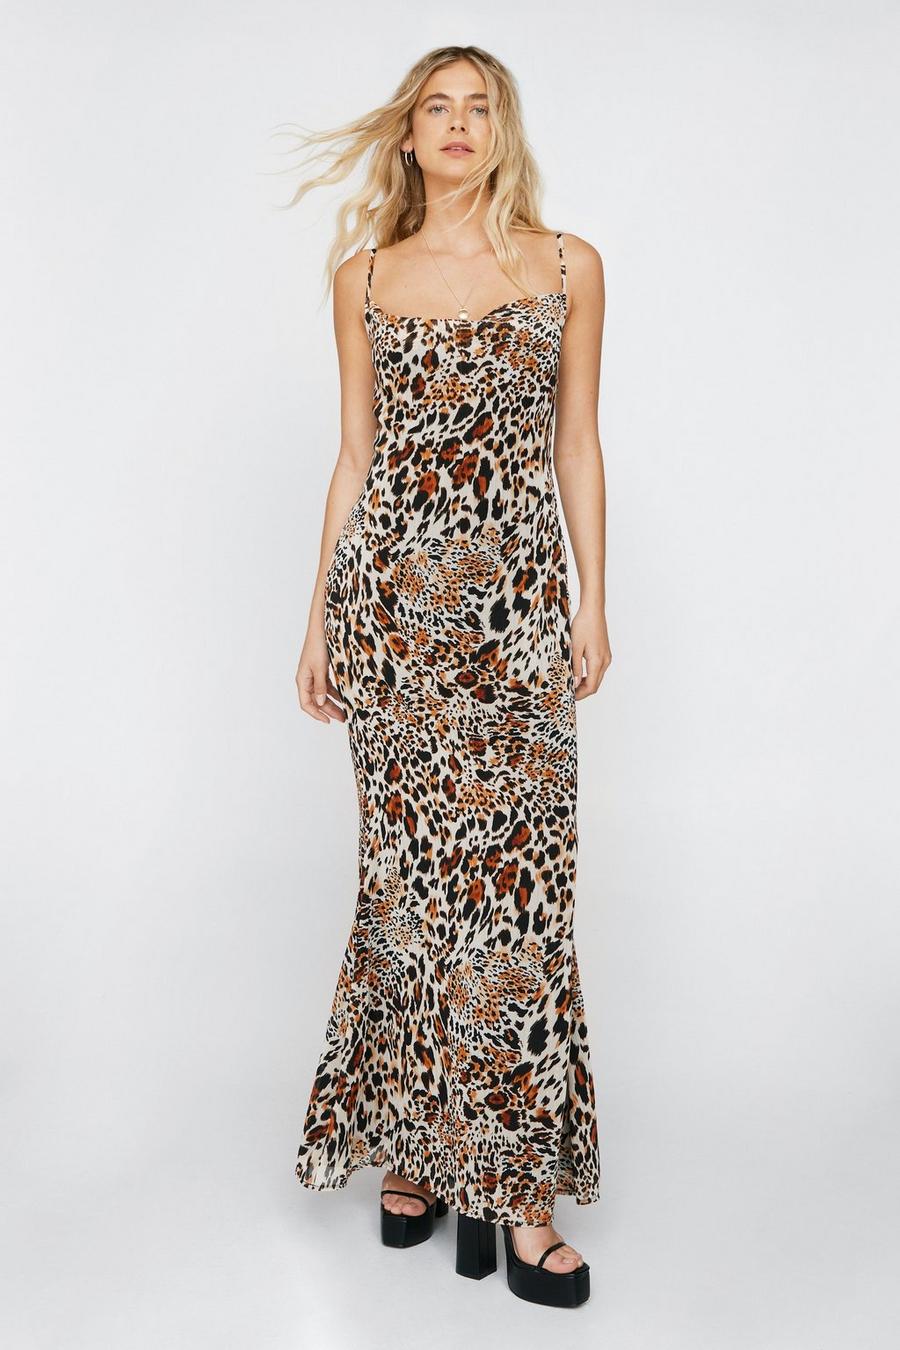 Leopard Print Cowl Neck Maxi Dress